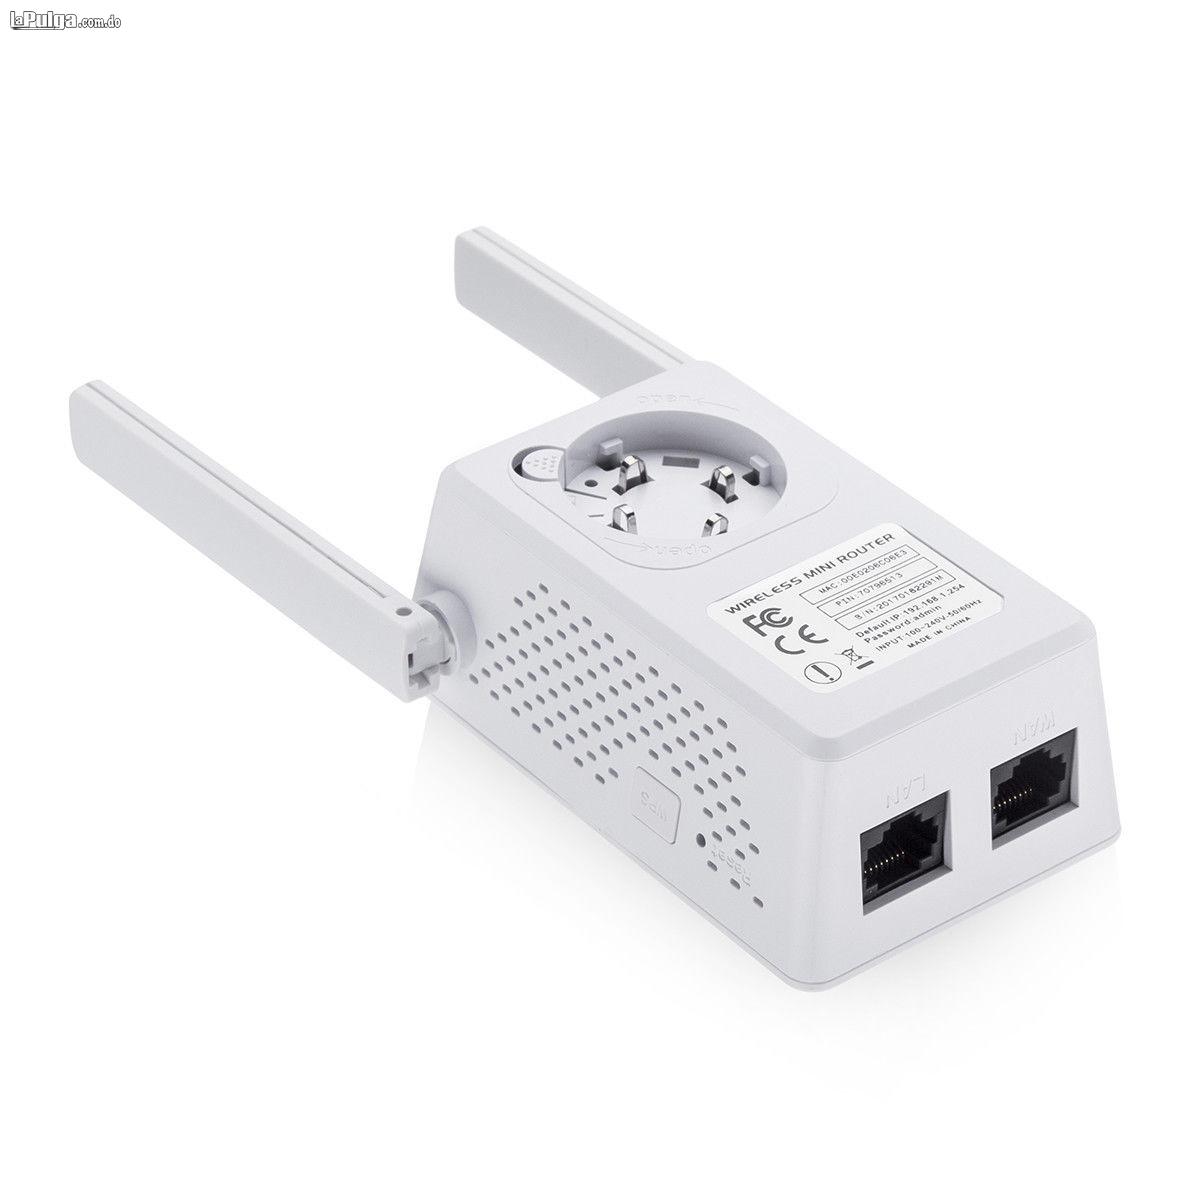 Router Repetidor Wifi Amplificador Doble Antena 300mbs Avanzado Foto 6566315-3.jpg